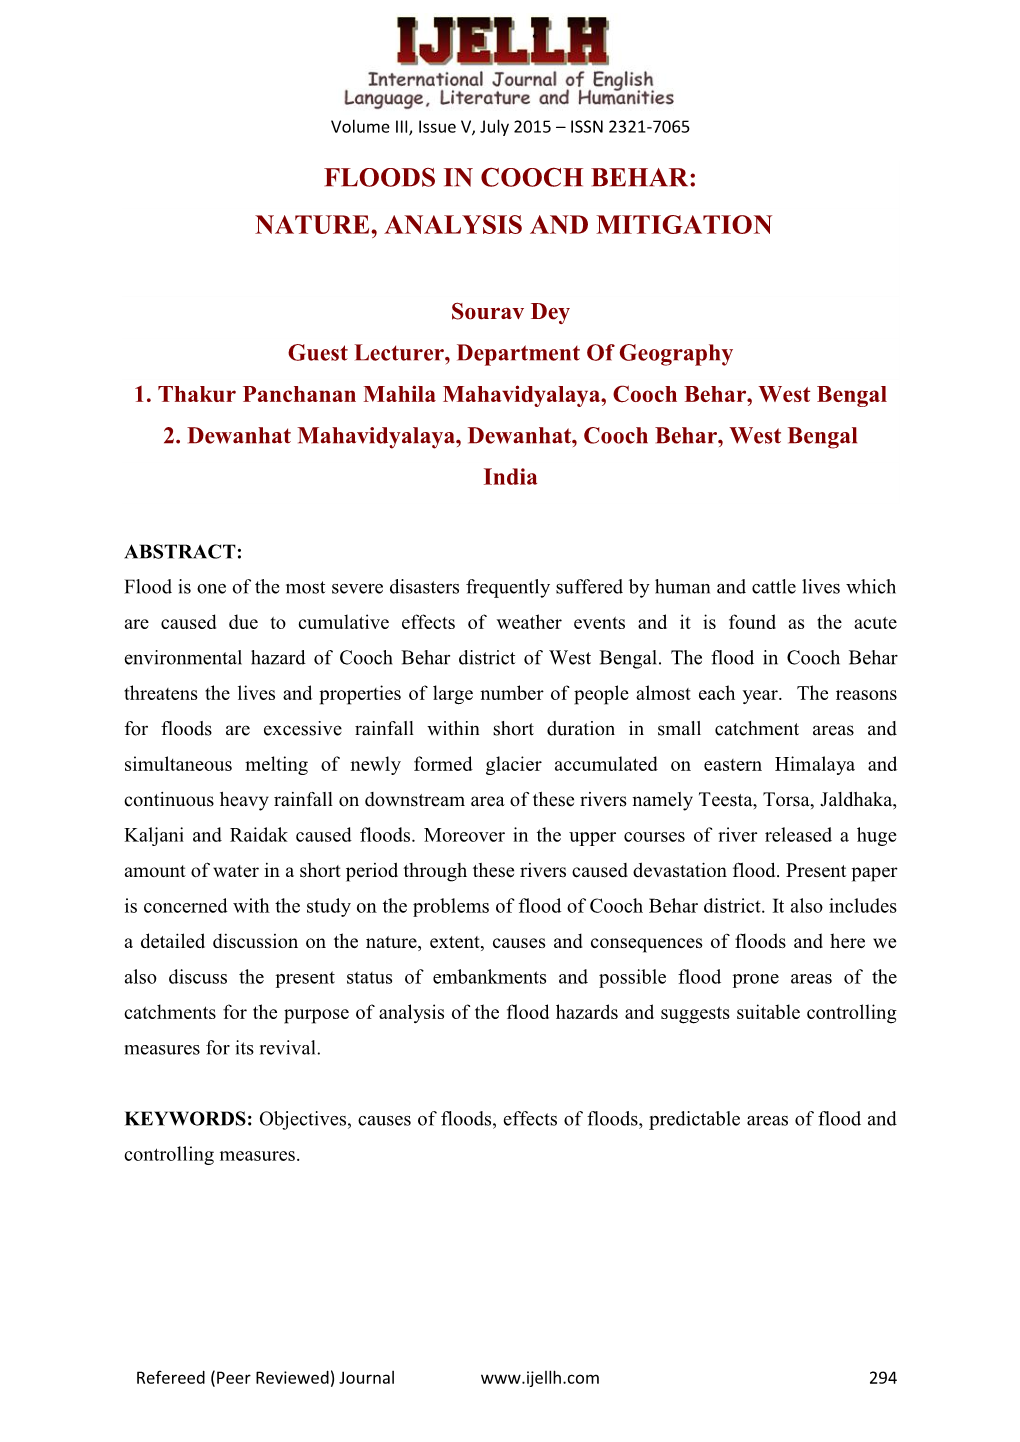 Floods in Cooch Behar: Nature, Analysis and Mitigation